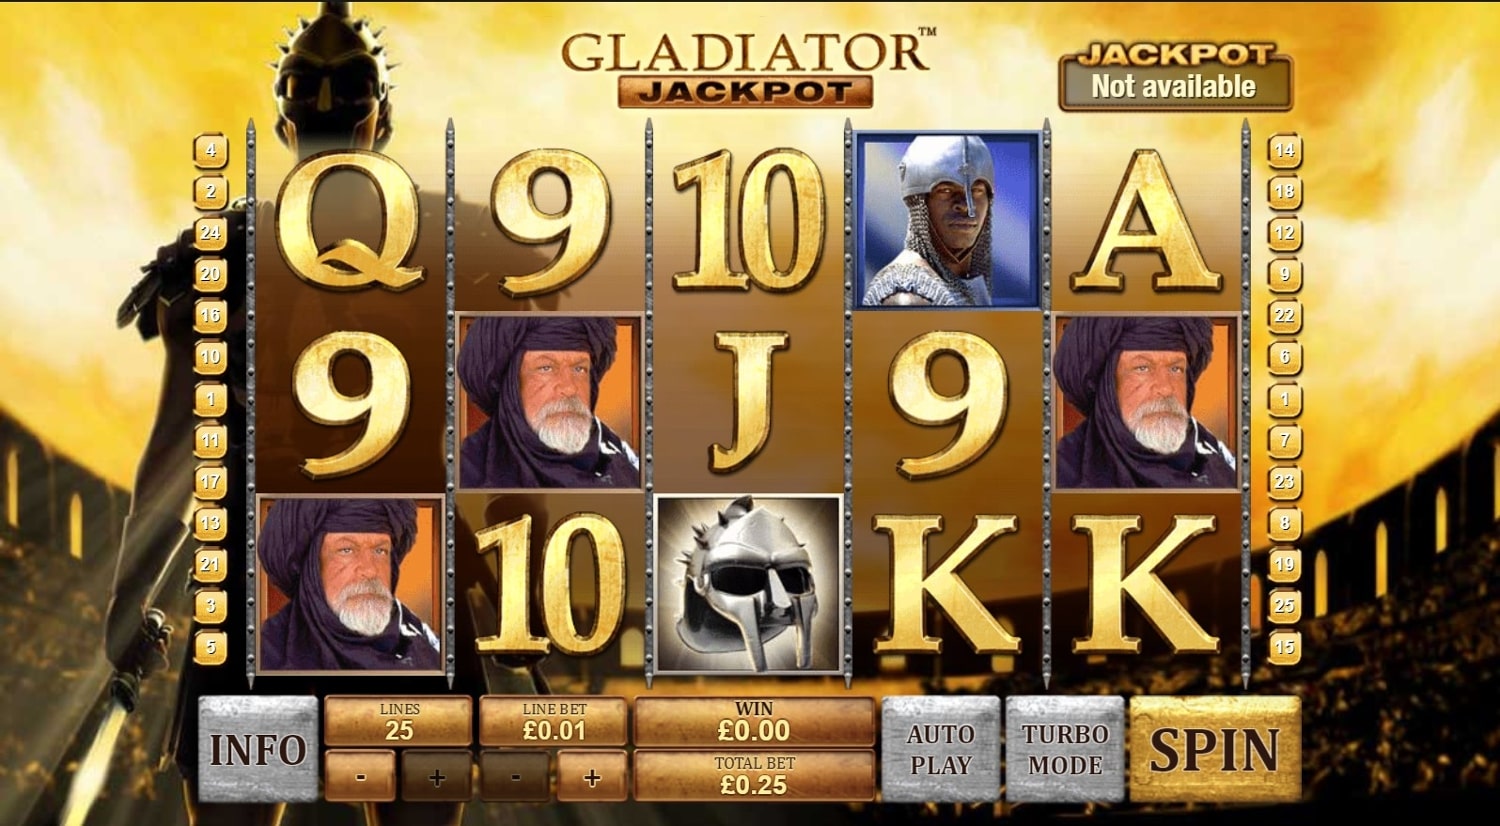 Gladiator Jackpot Free Spins